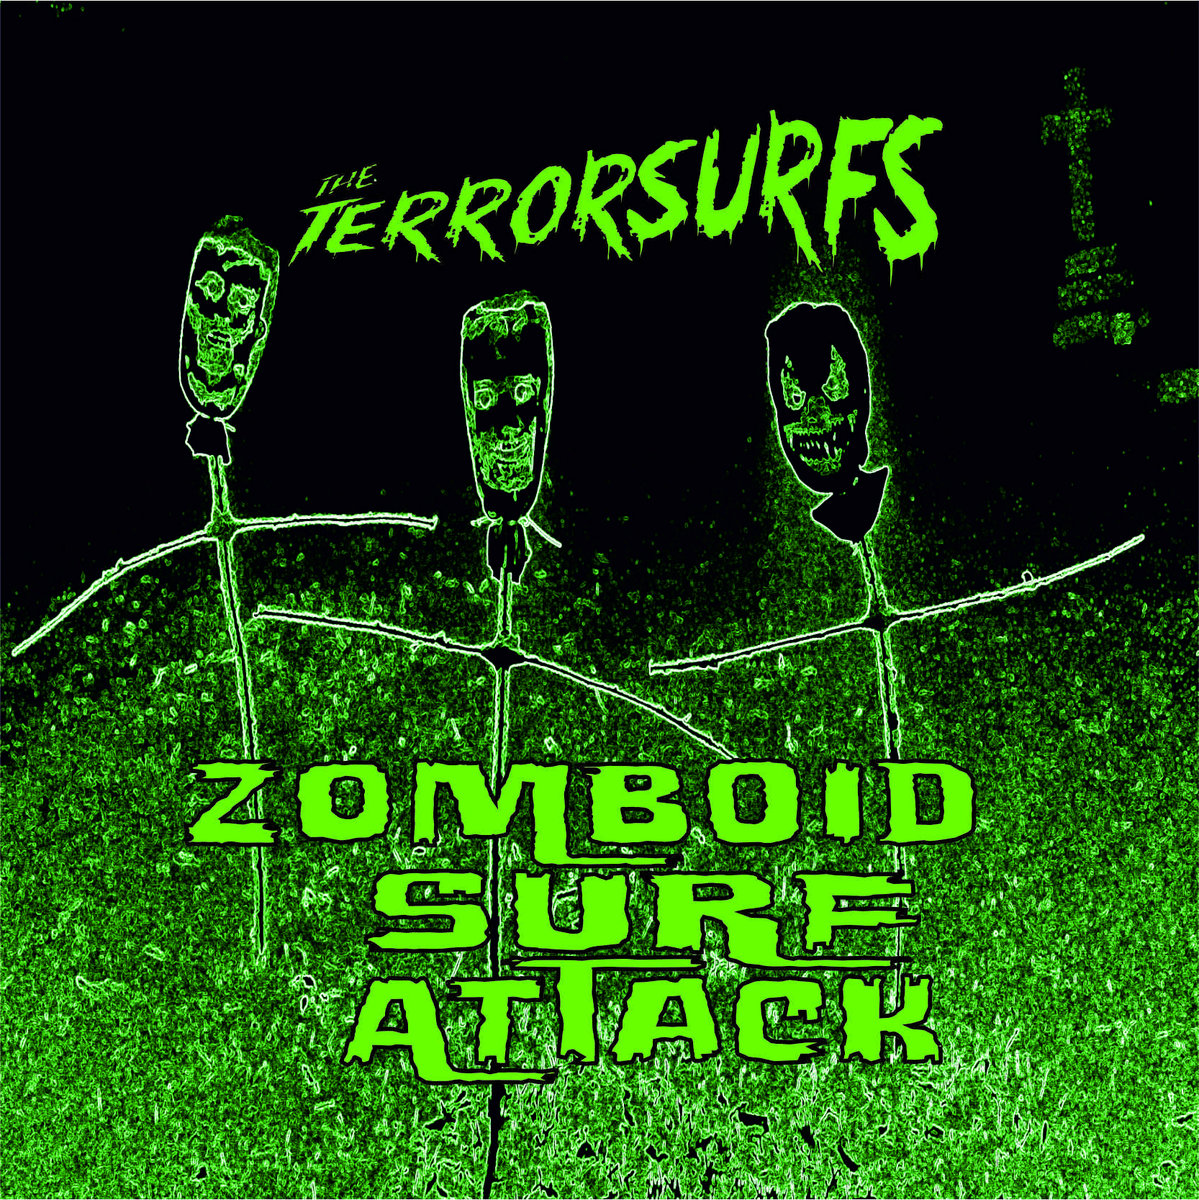 a3357865119_10 The Terrorsurfs release Zomboid Surf Attack - SHARAWAJI.COM